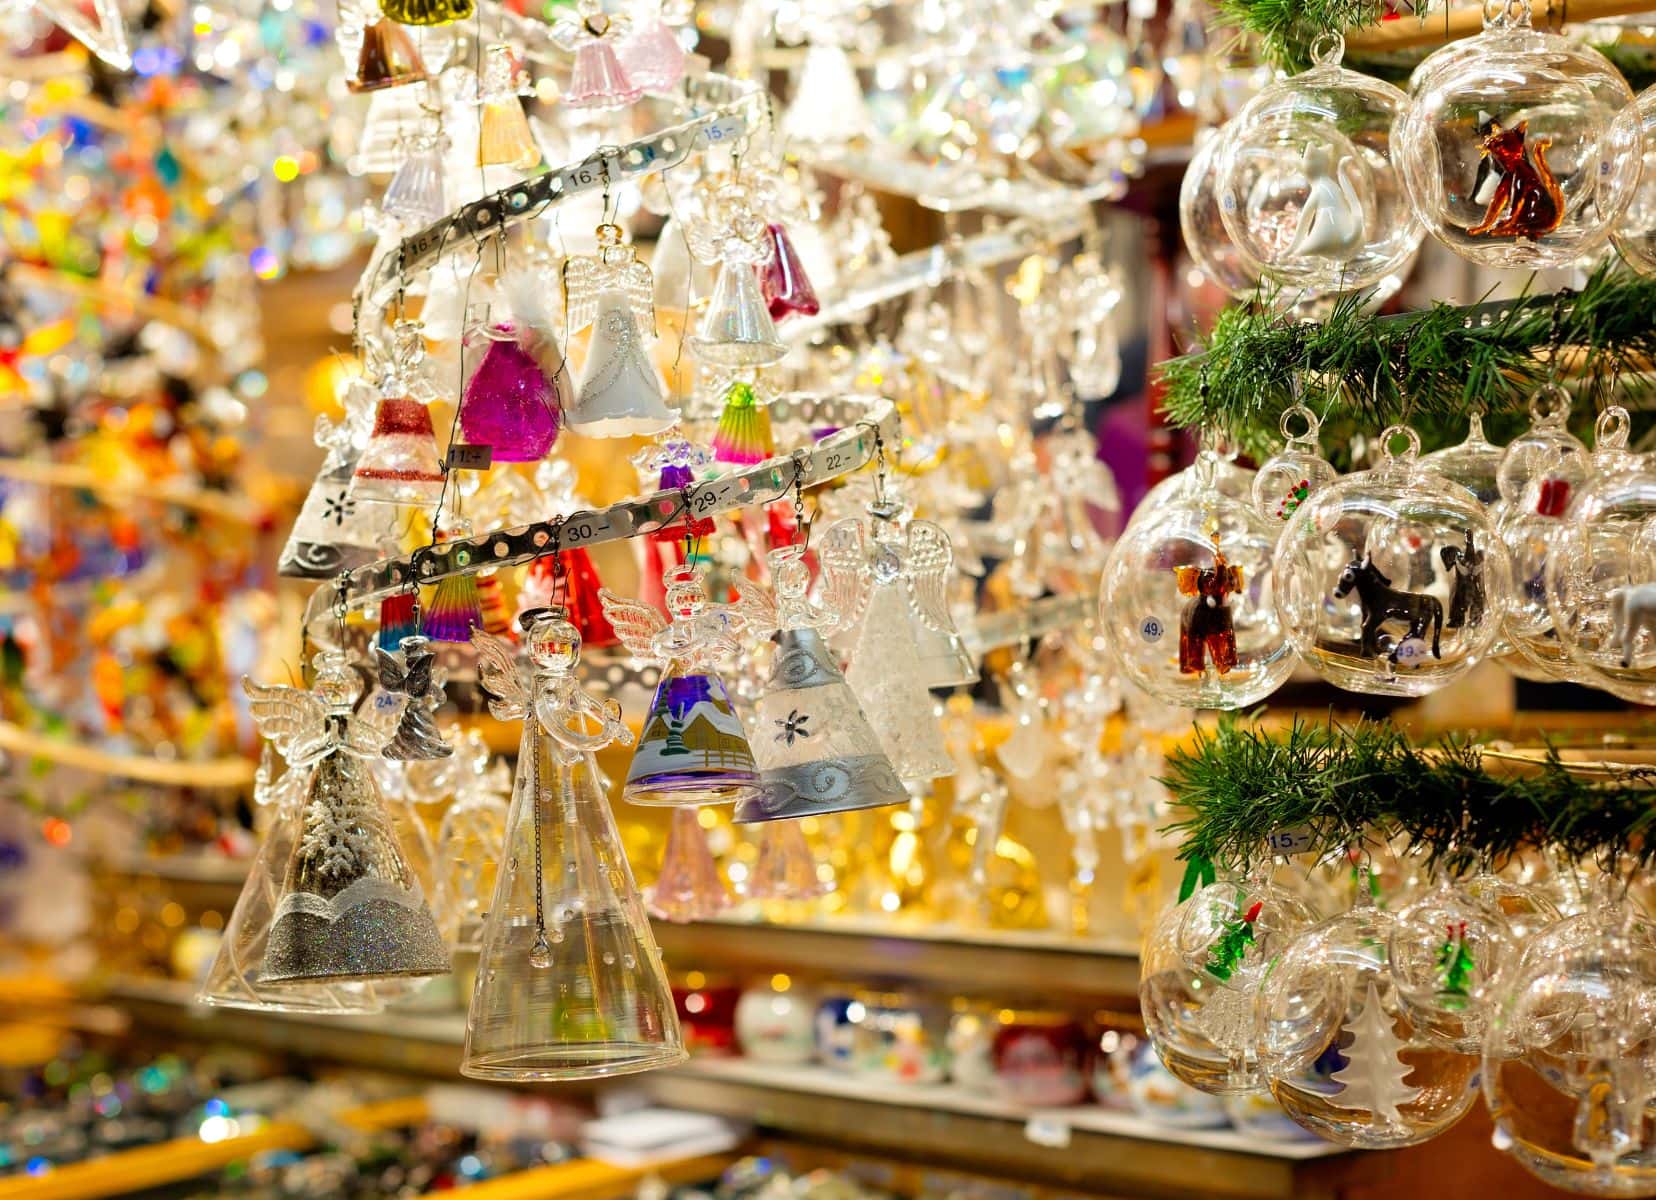 Switzerland Christmas Markets ornaments on display